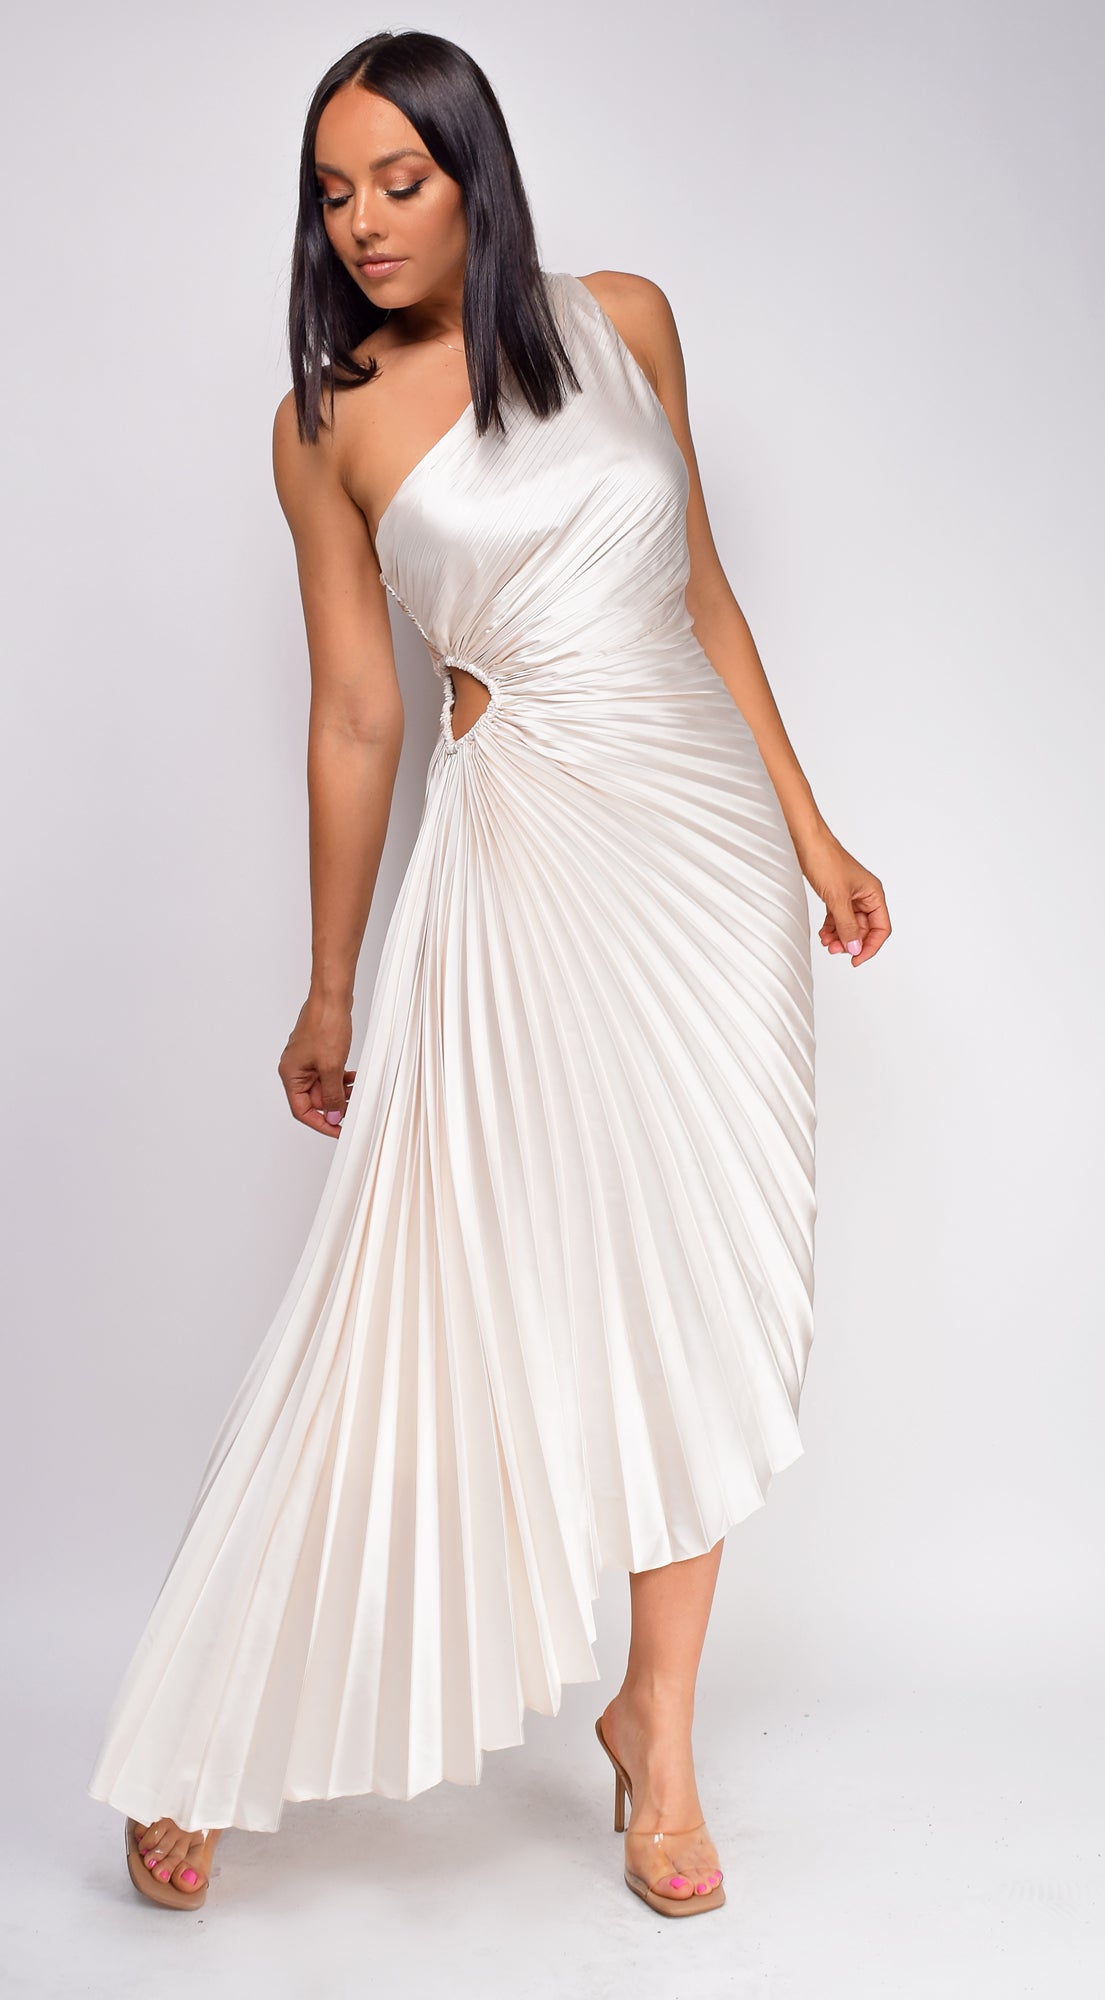 River Pearl Beige Asymmetrical Pleated Maxi Dress